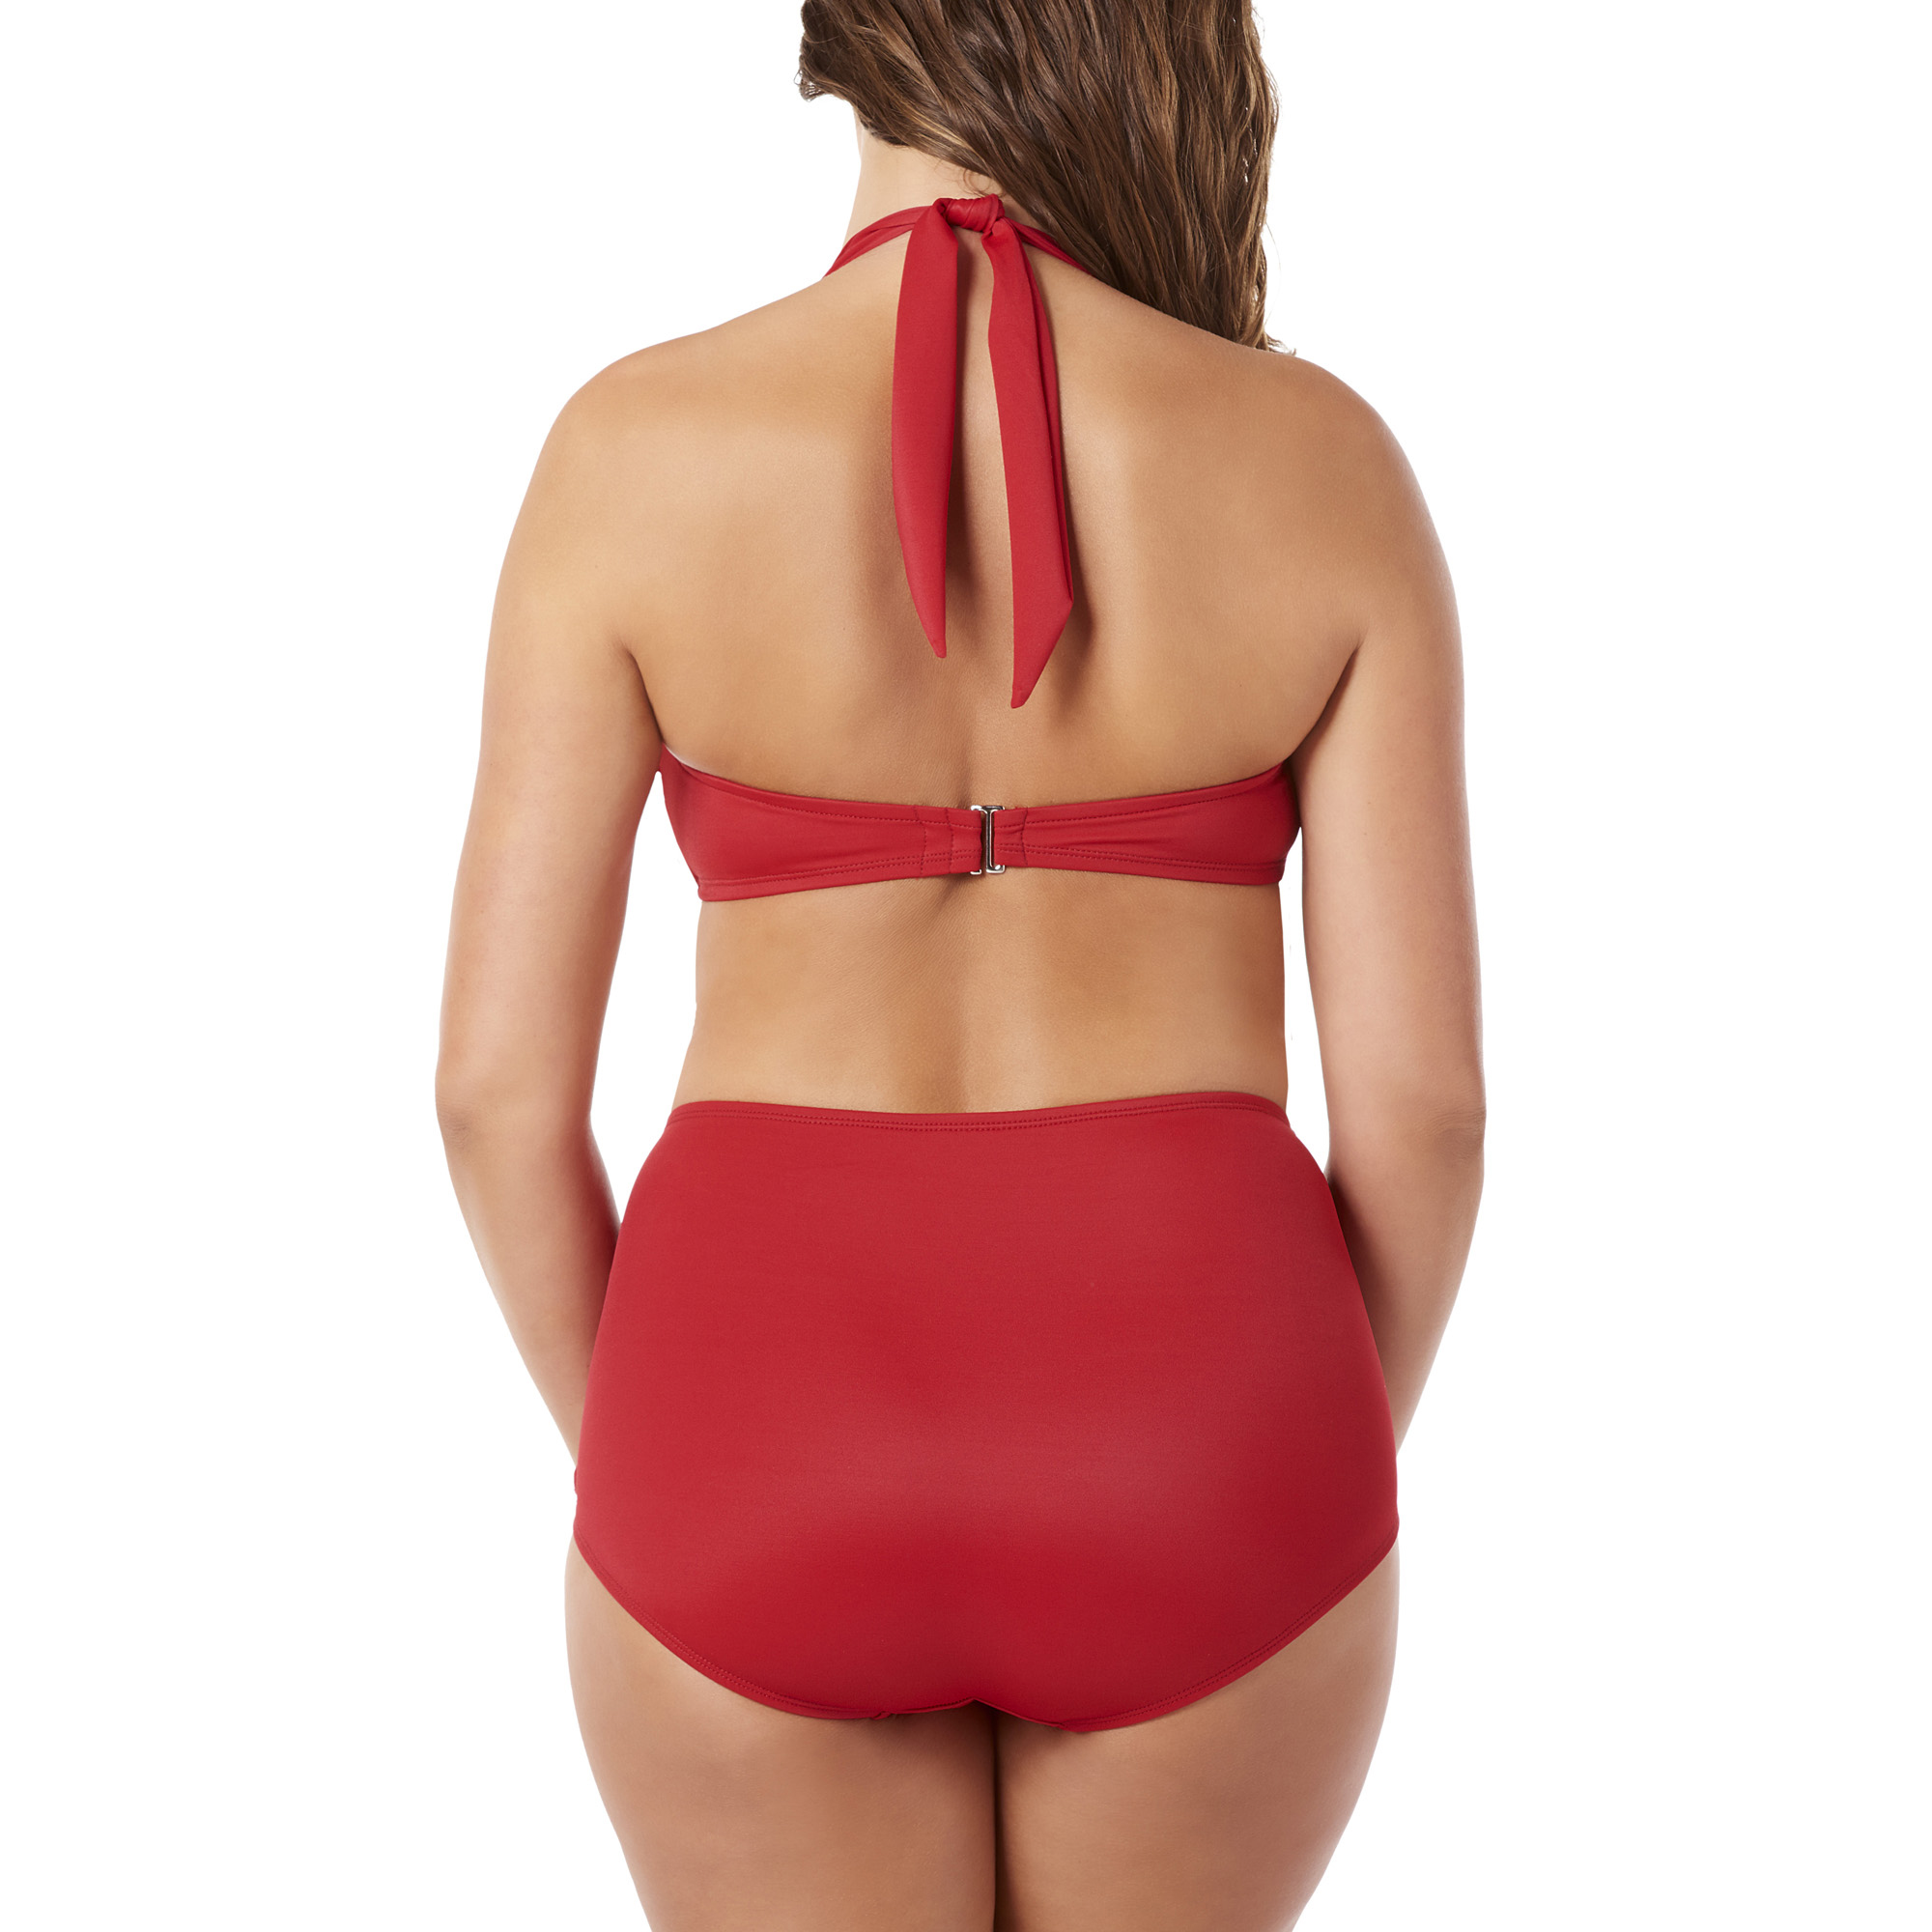 Simply Slim Women's Two-Piece Sheath Swimsuit Set - image 2 of 2